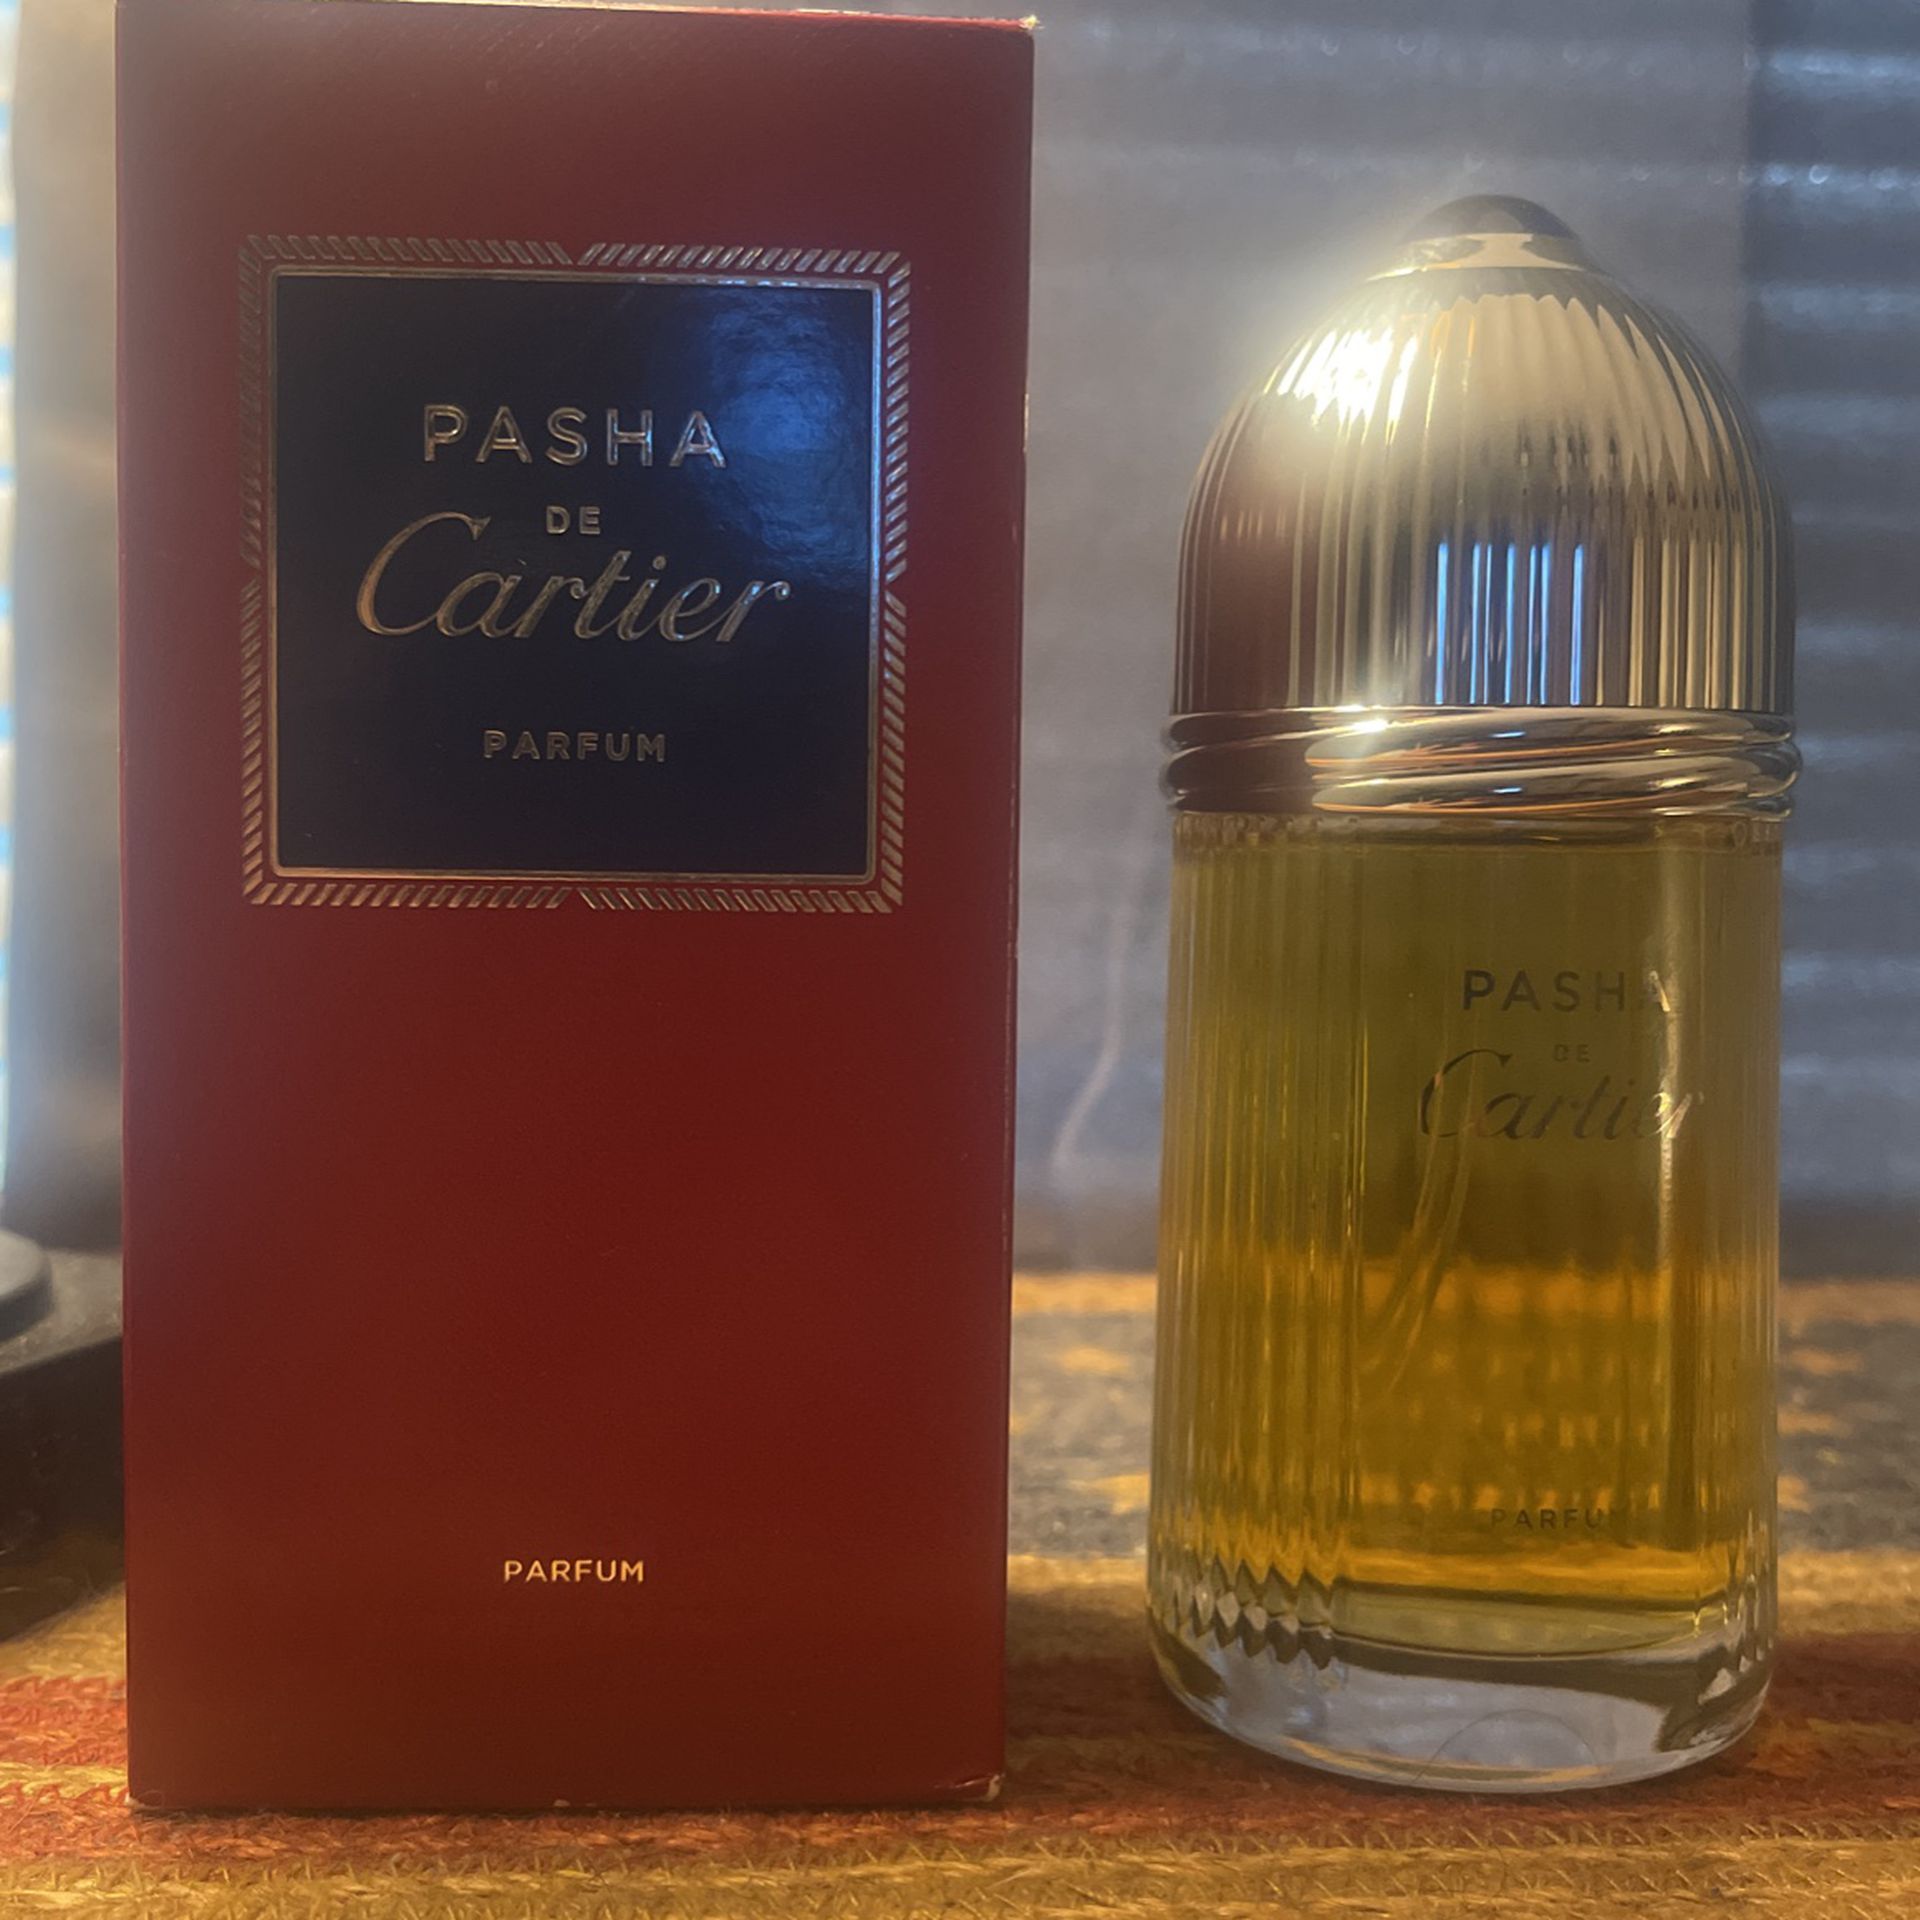 Pasha de Cartier perfume